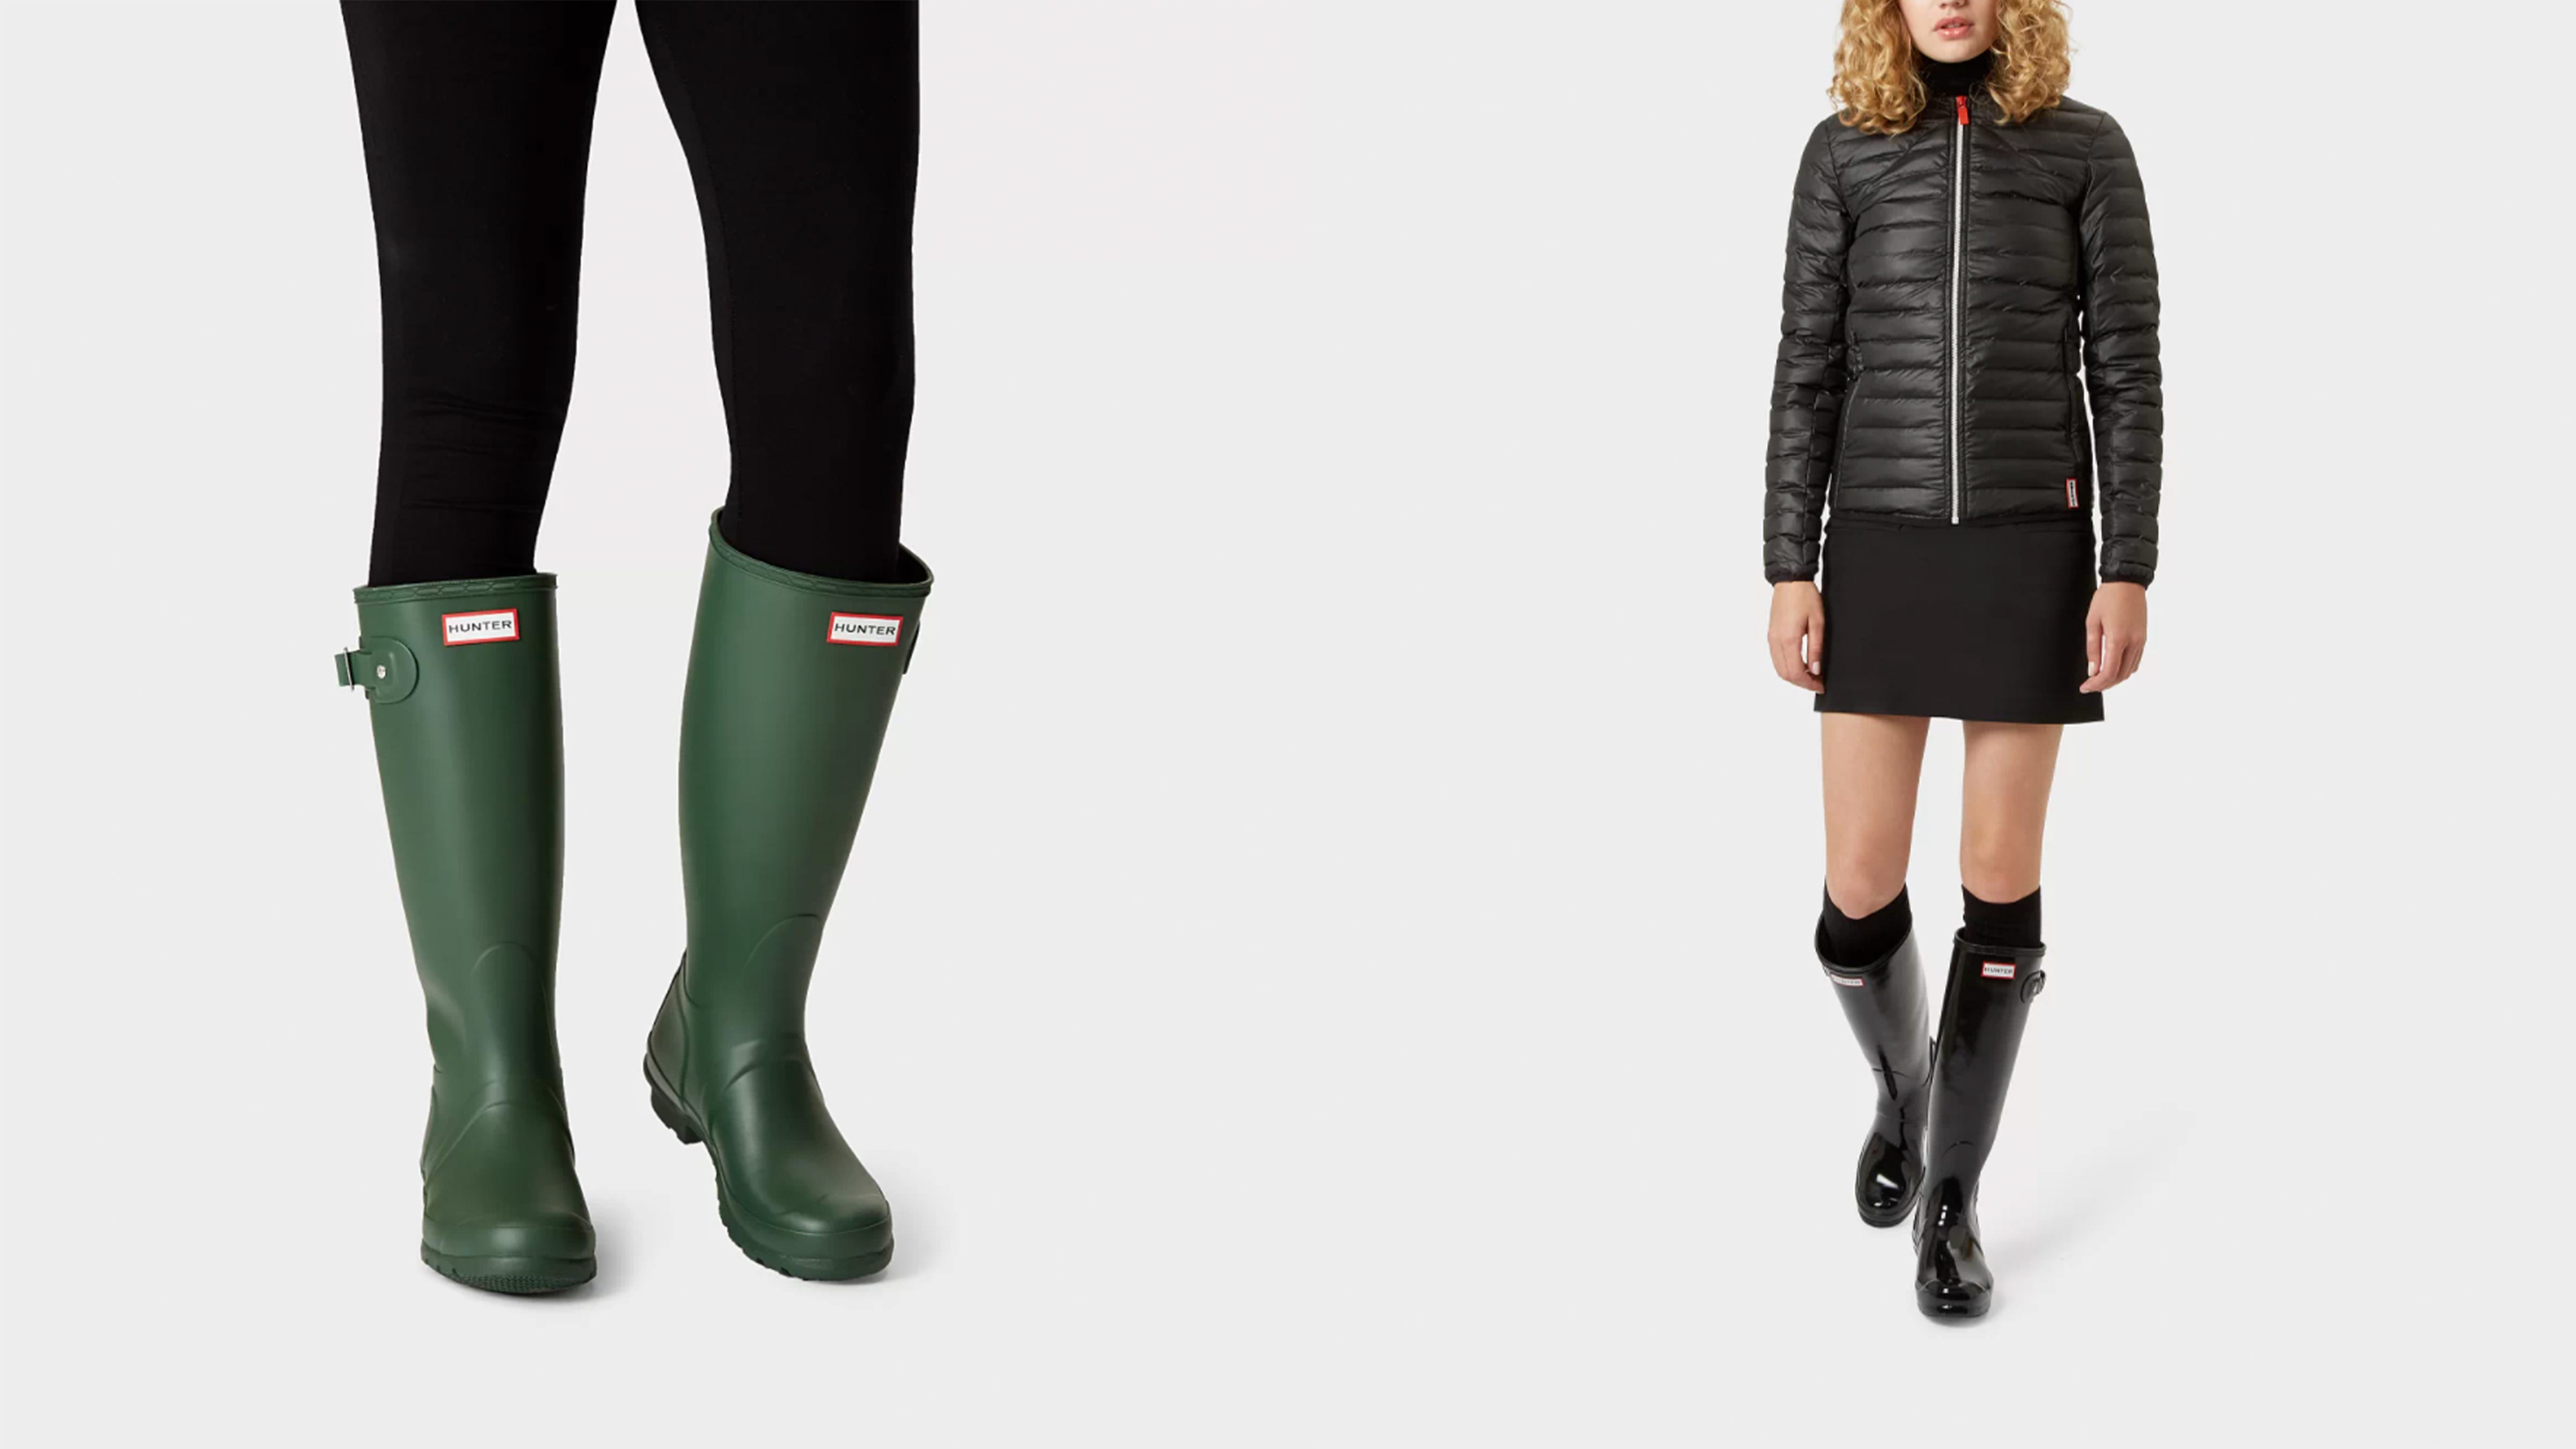 hunter rain boots on sale womens